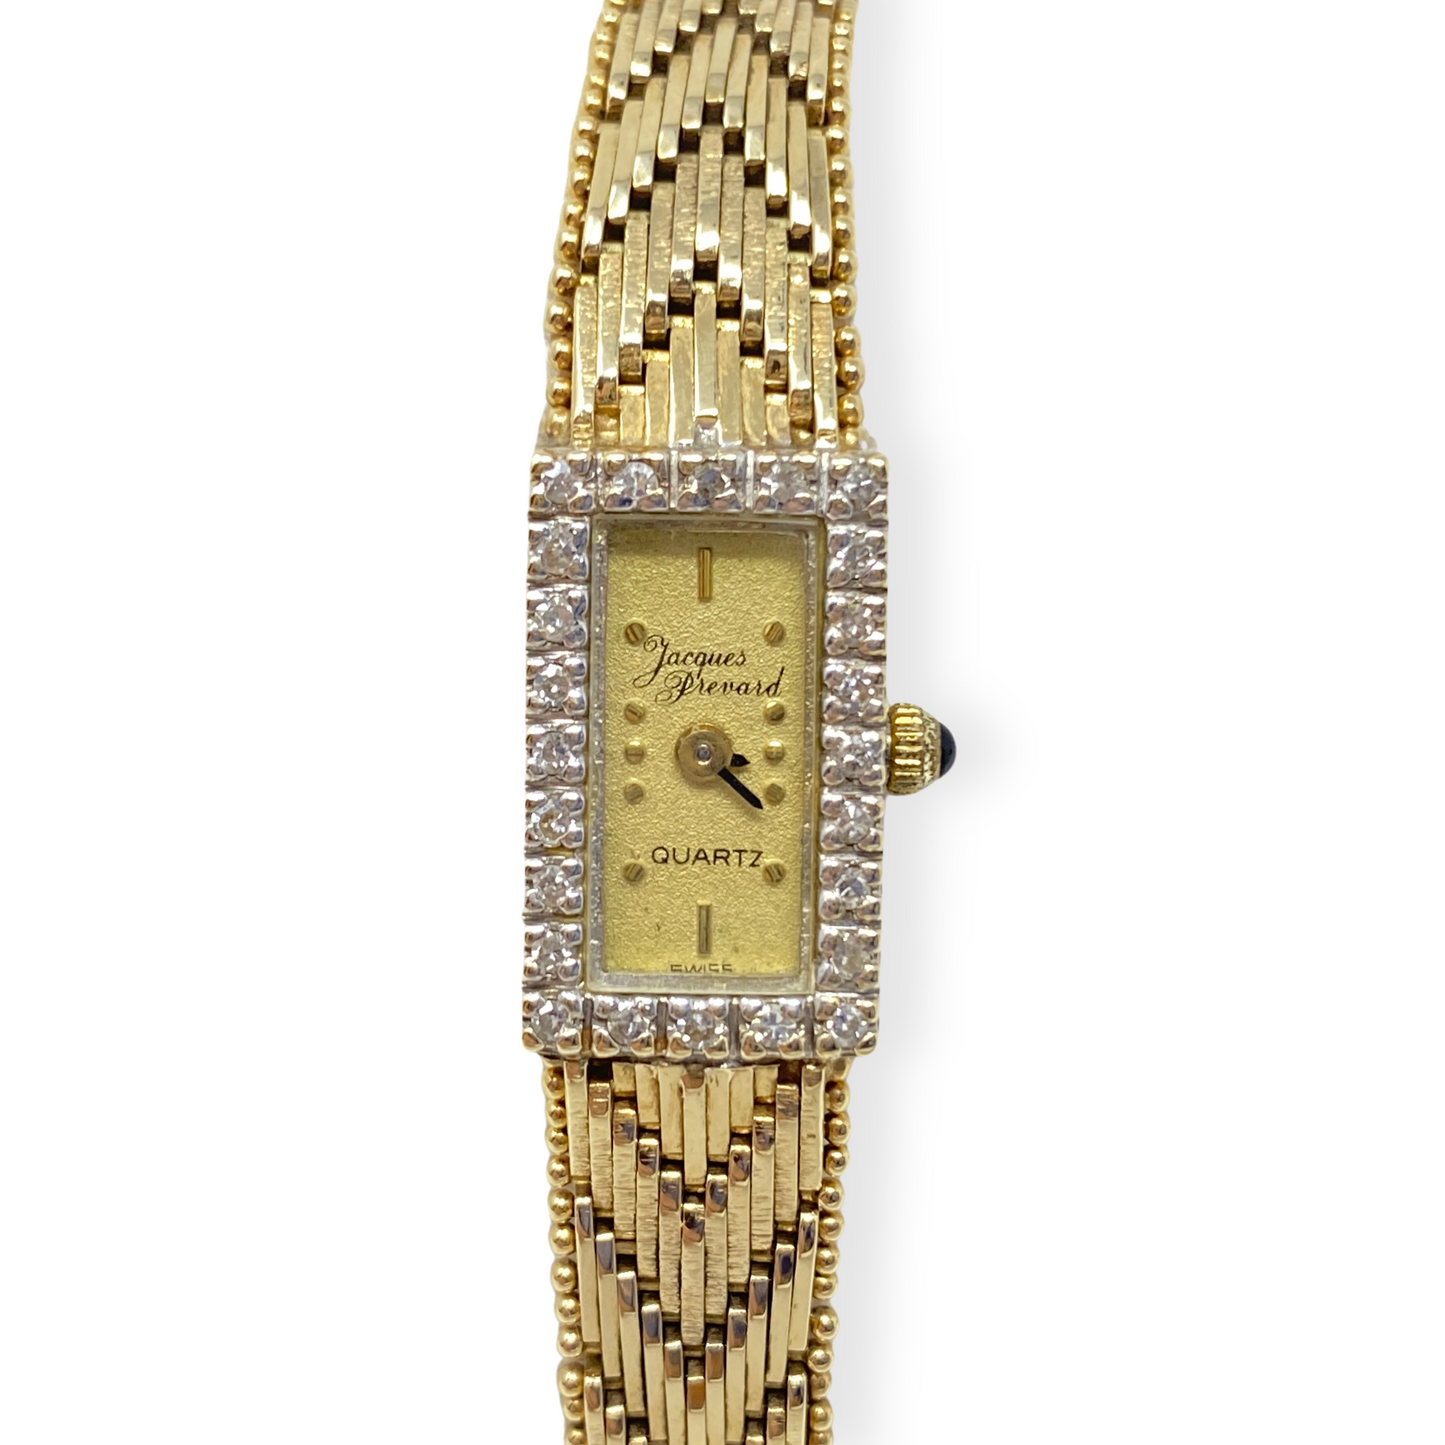 Jacques Prevard 14K Gold & Diamond Lady's Quartz Watch